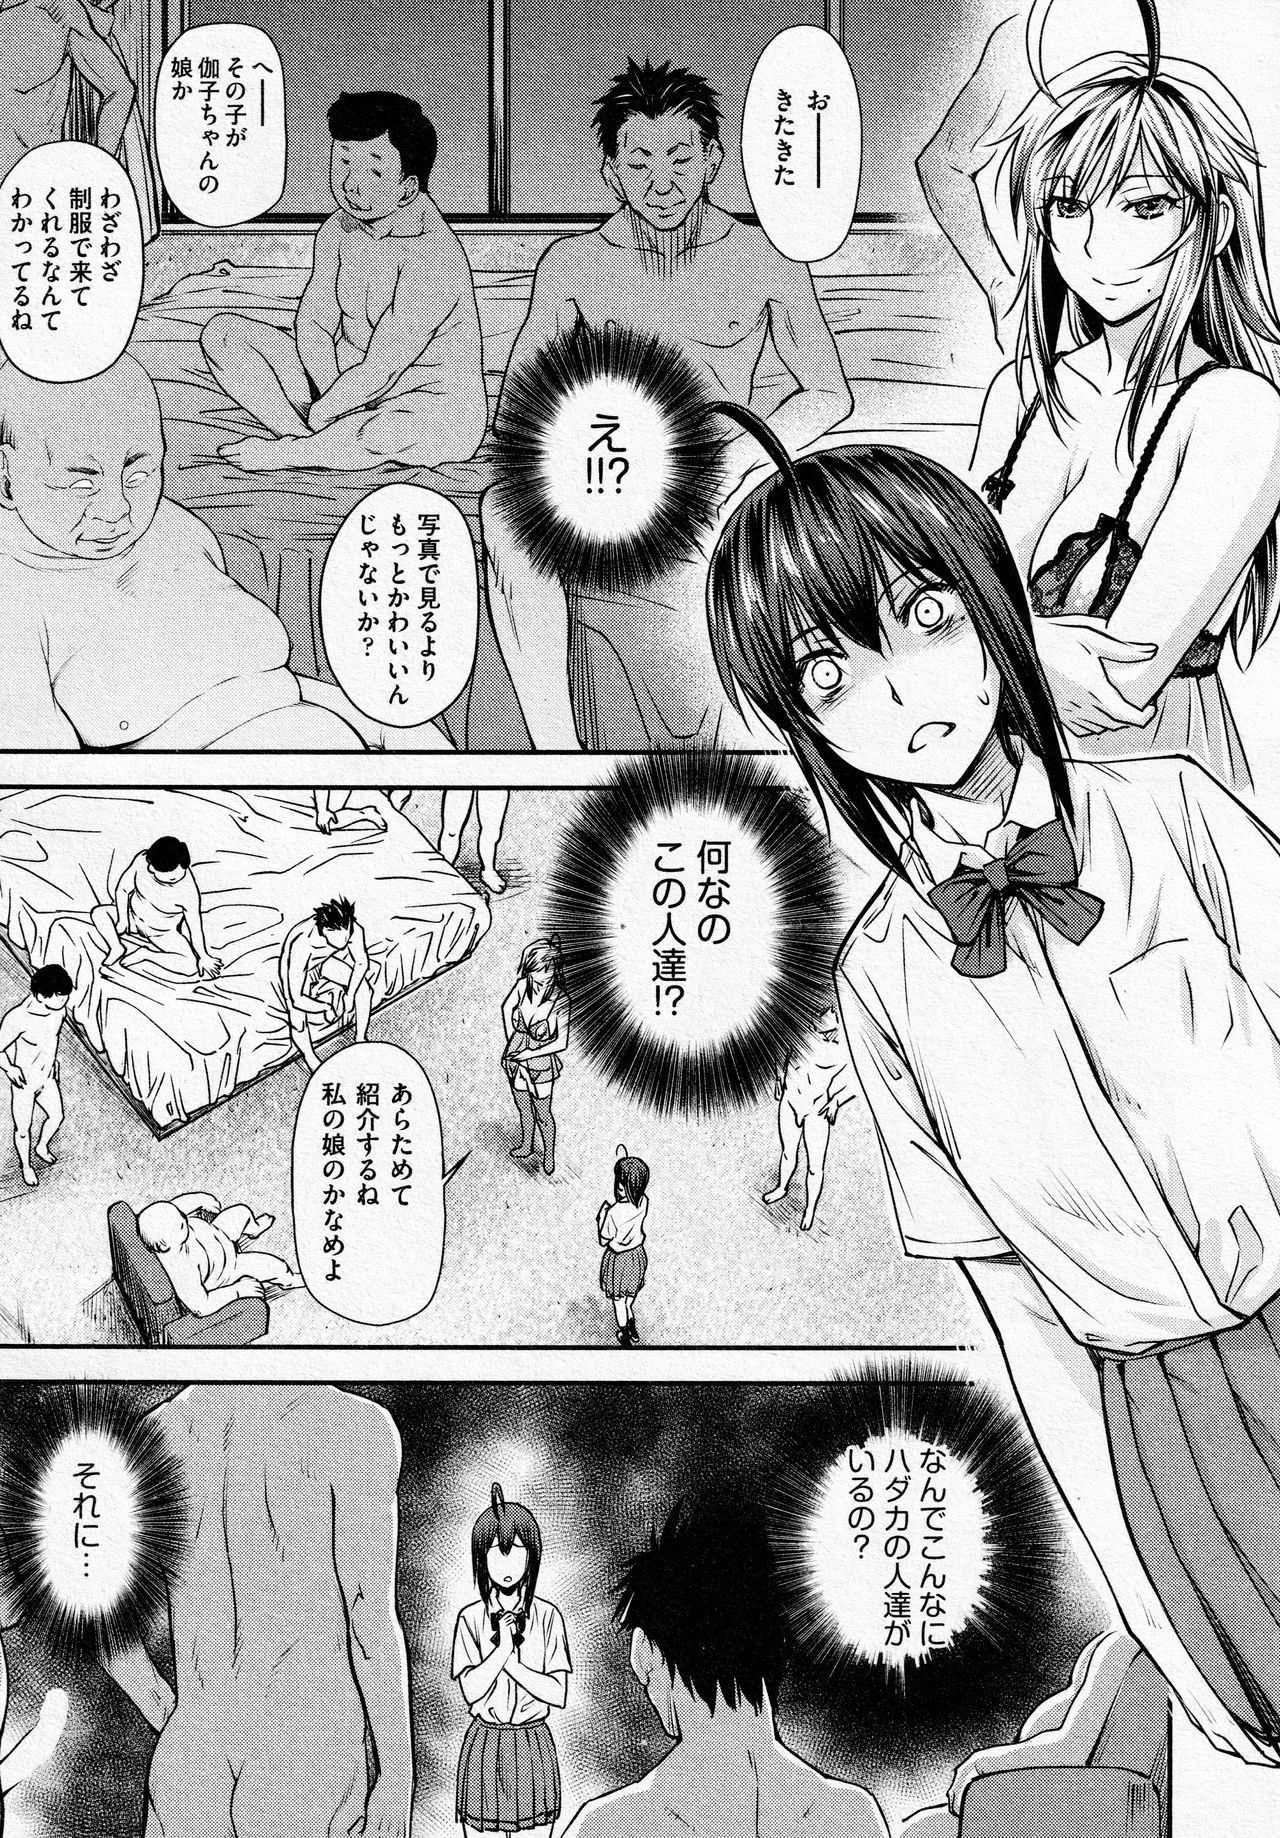 Kaname Date #14 - Page 5 - IMHentai